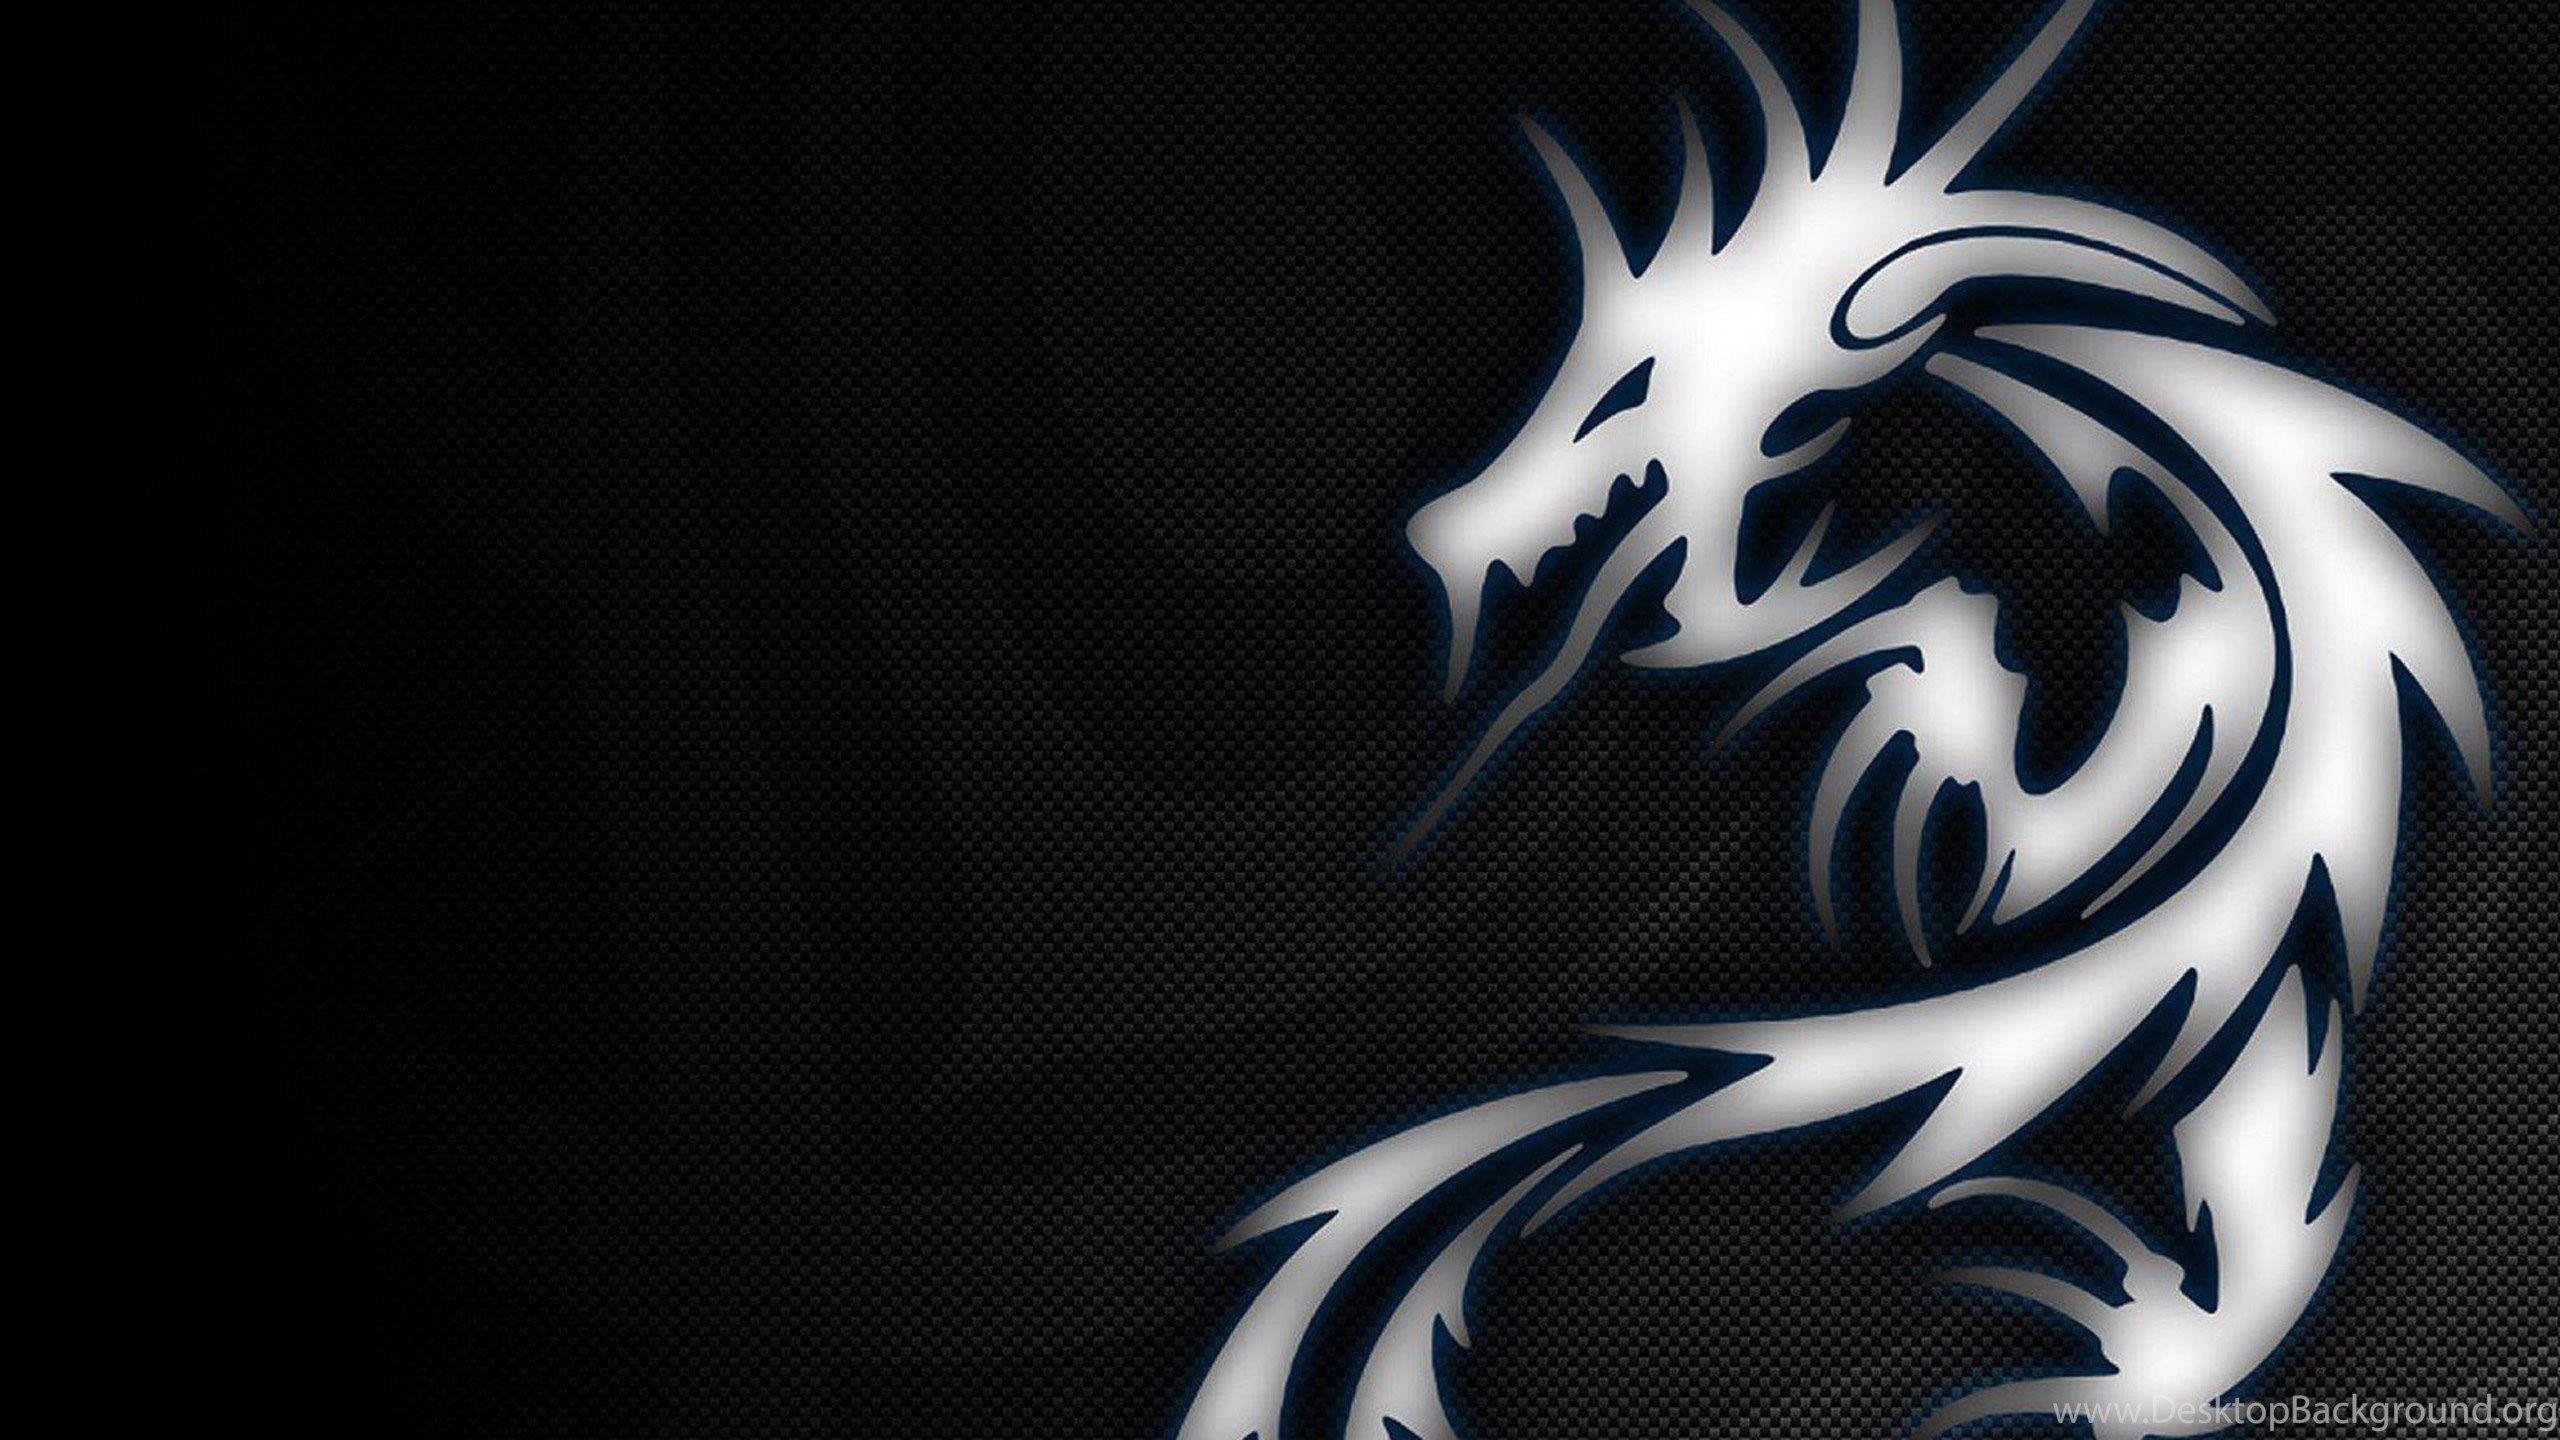 Dragon MSI Logo Wallpaper, HD Desktop Wallpaper Desktop Background